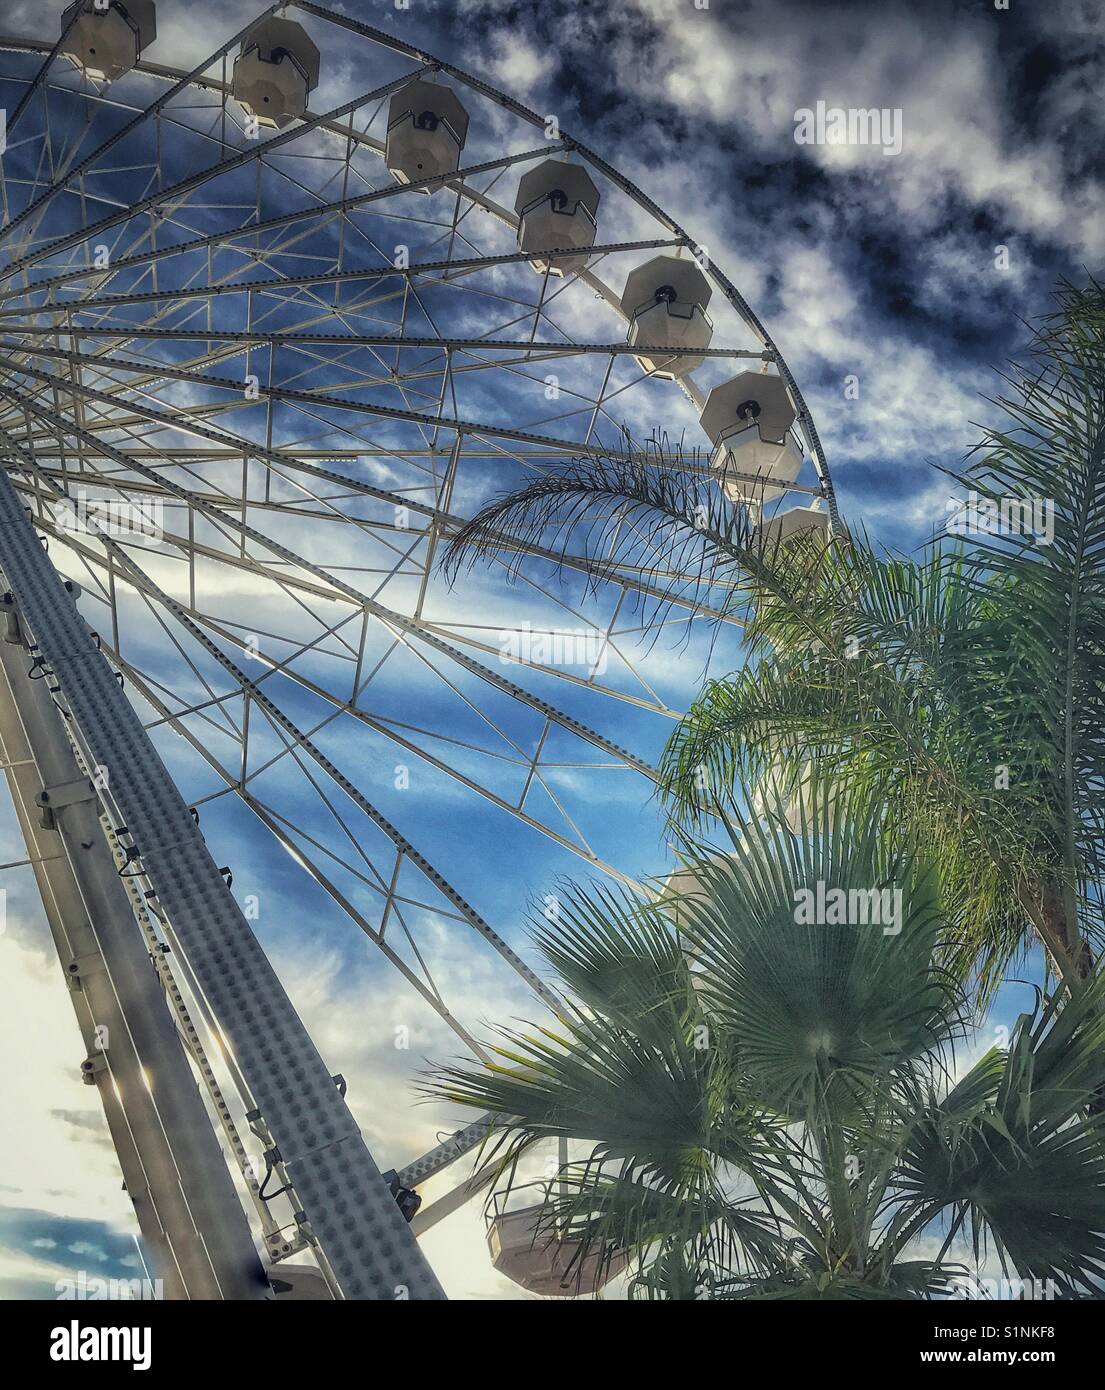 Ferris wheel Stock Photo